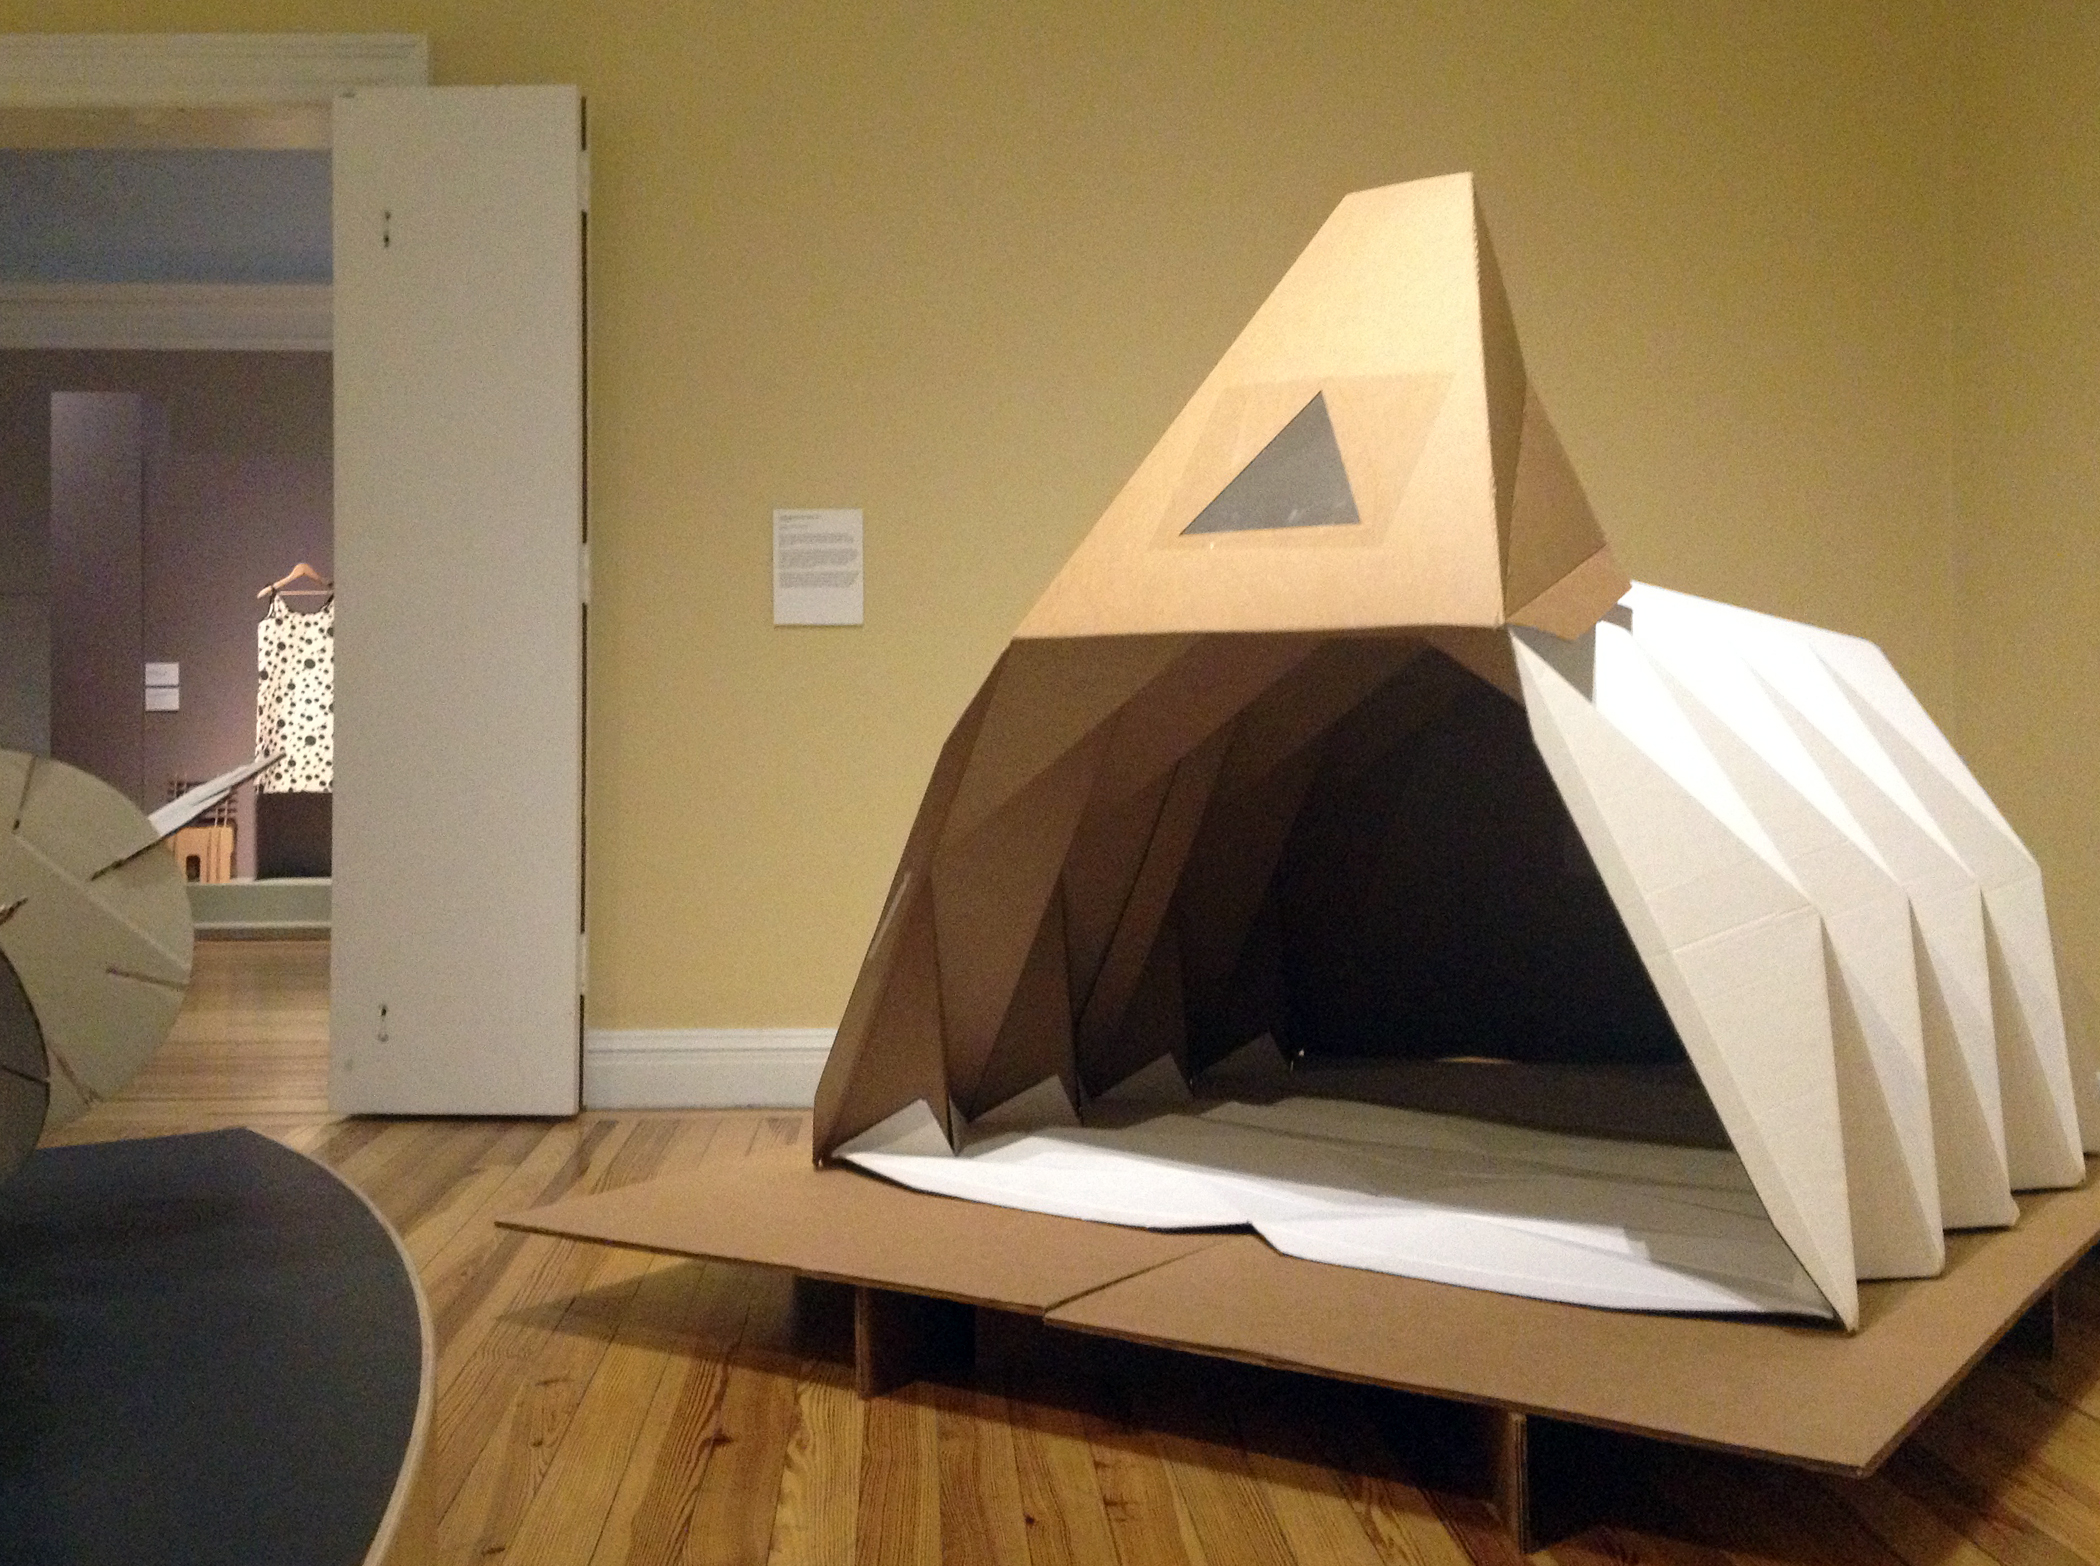 Cardborigami, Callison Architect Tina Hovsepian's Cardboard Shelter, Exhibited at Berkshire Museum